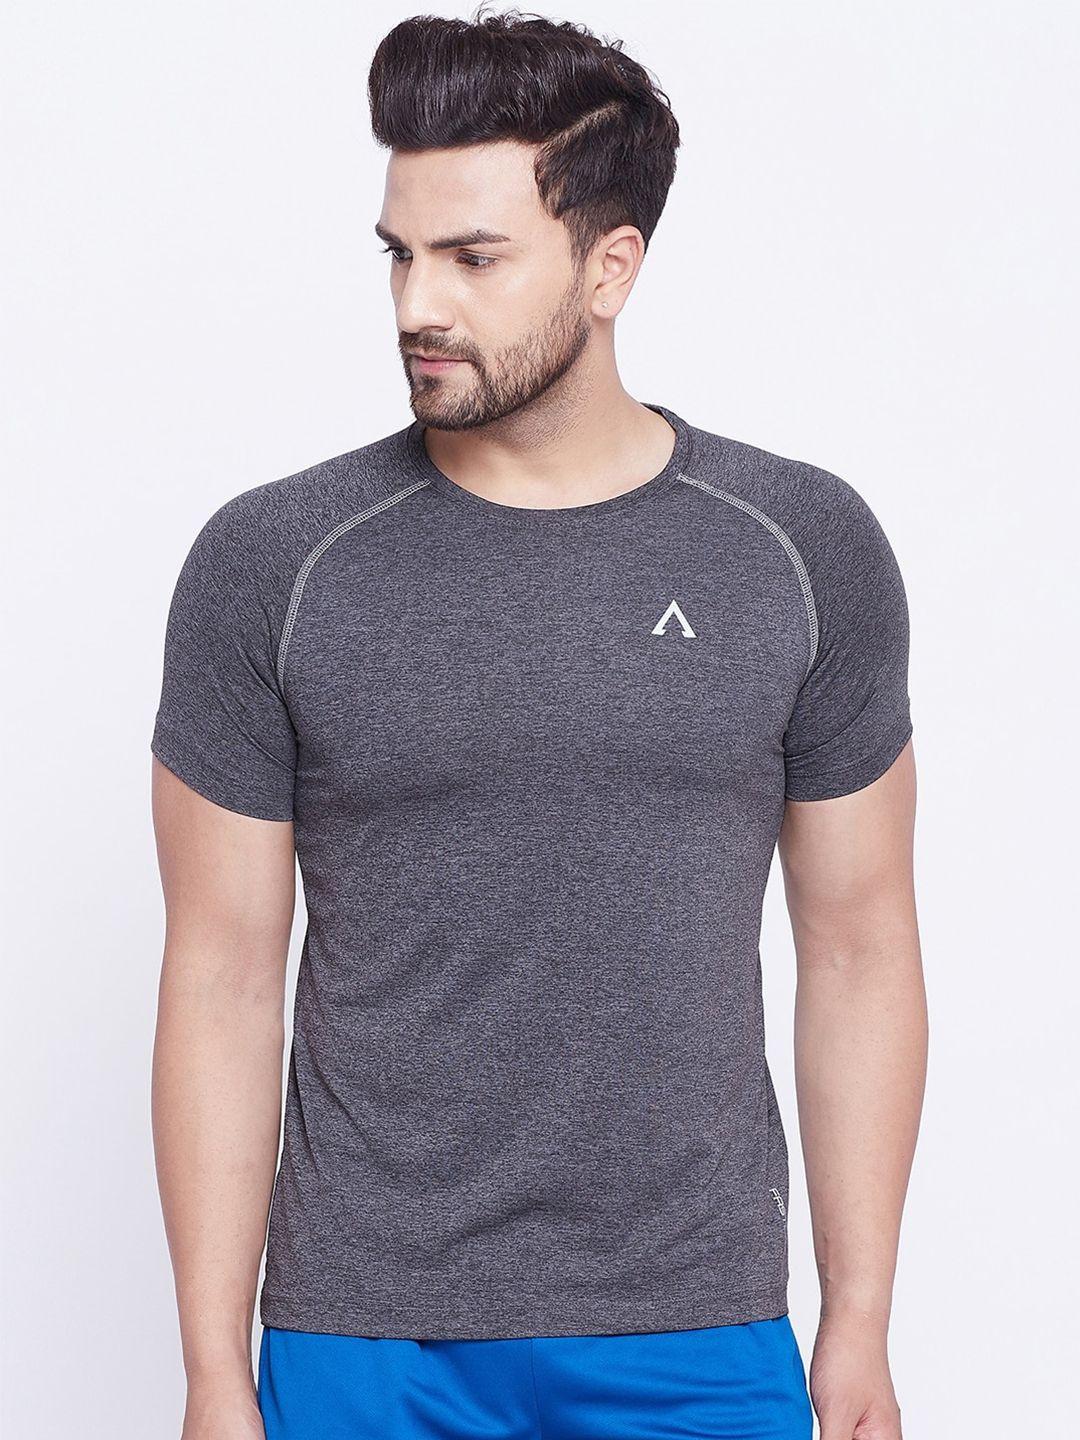 austiex men grey drop-shoulder sleeves slim fit running t-shirt